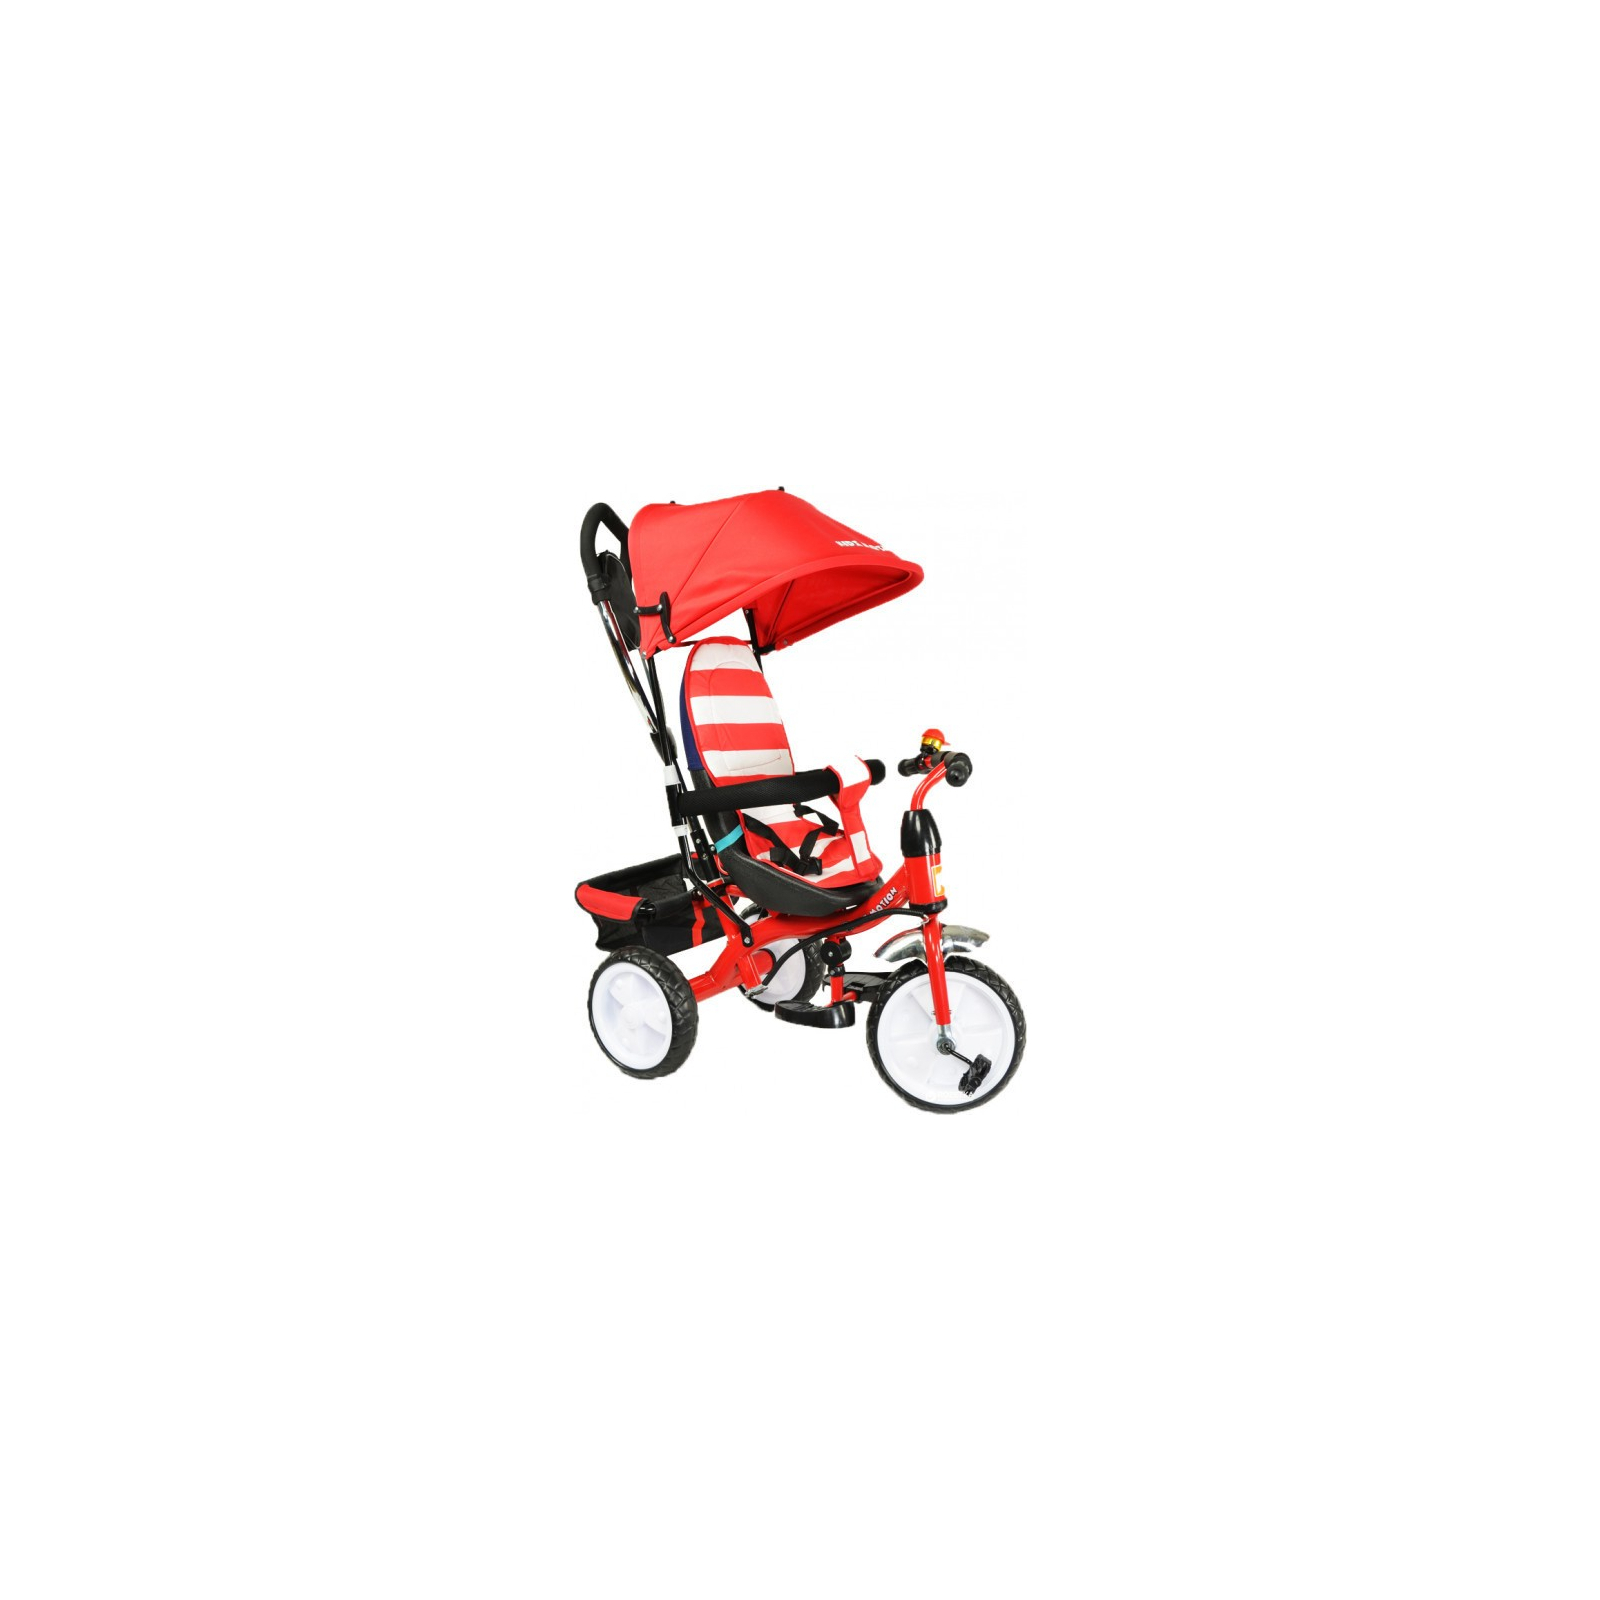 Детский велосипед KidzMotion Tobi Junior RED (115001/red)